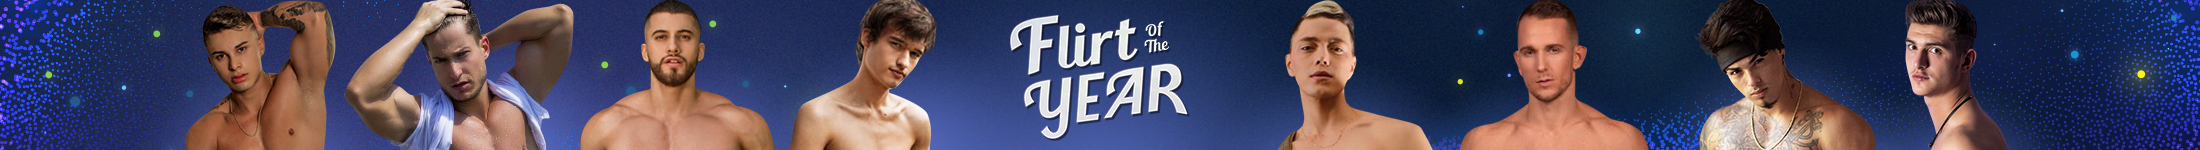 Flirt of the Year Promo